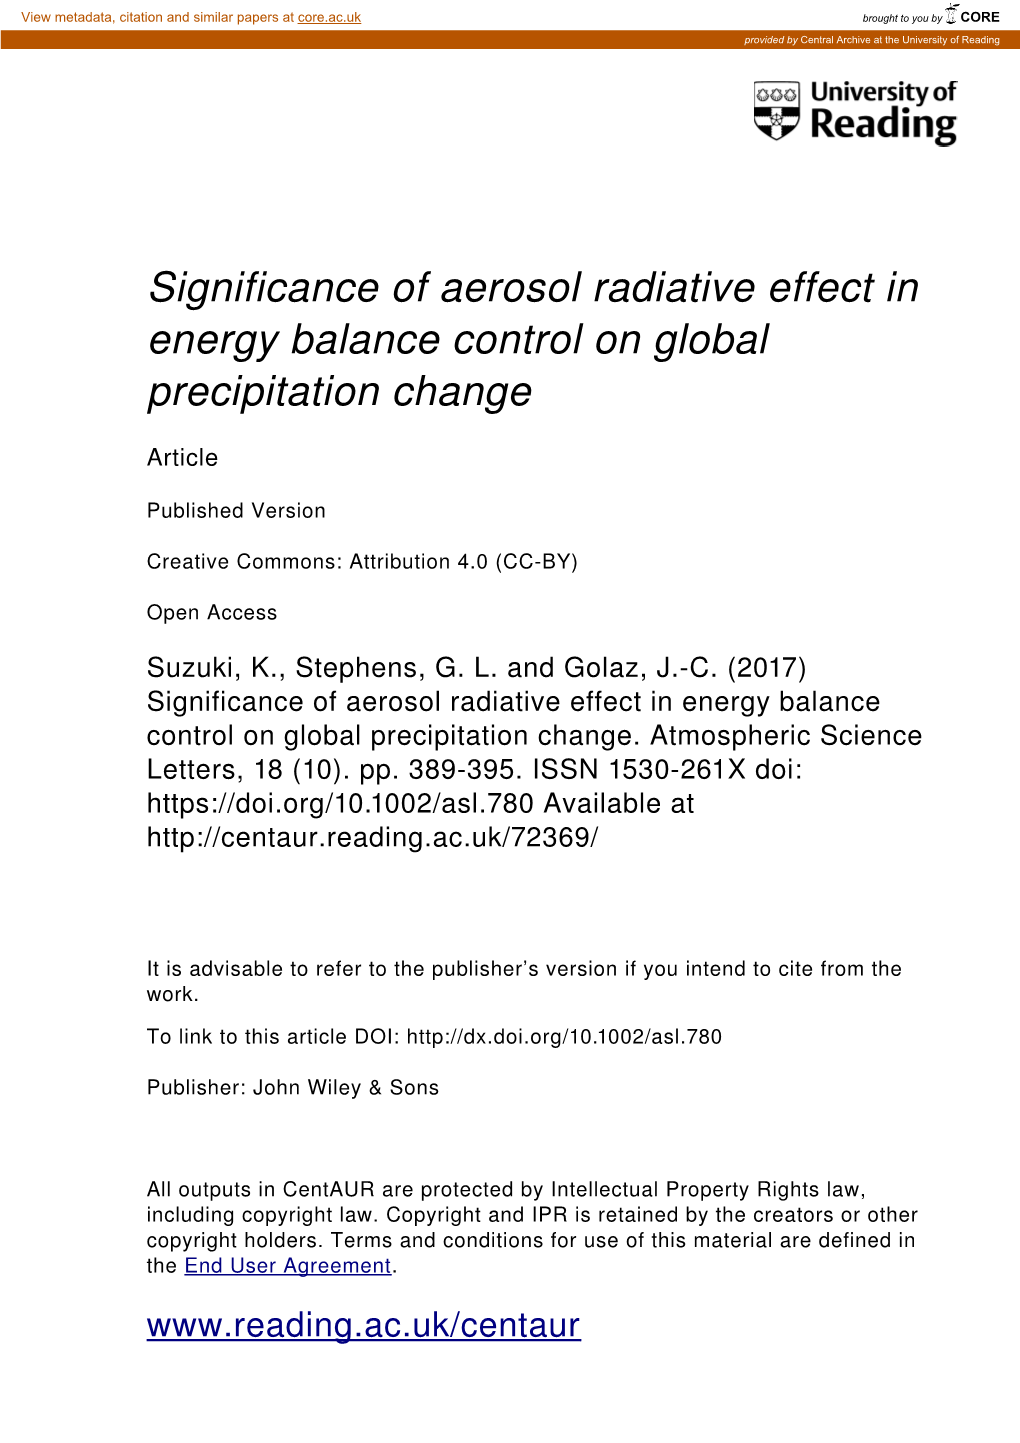 Significance of Aerosol Radiative Effect in Energy Balance Control on Global Precipitation Change